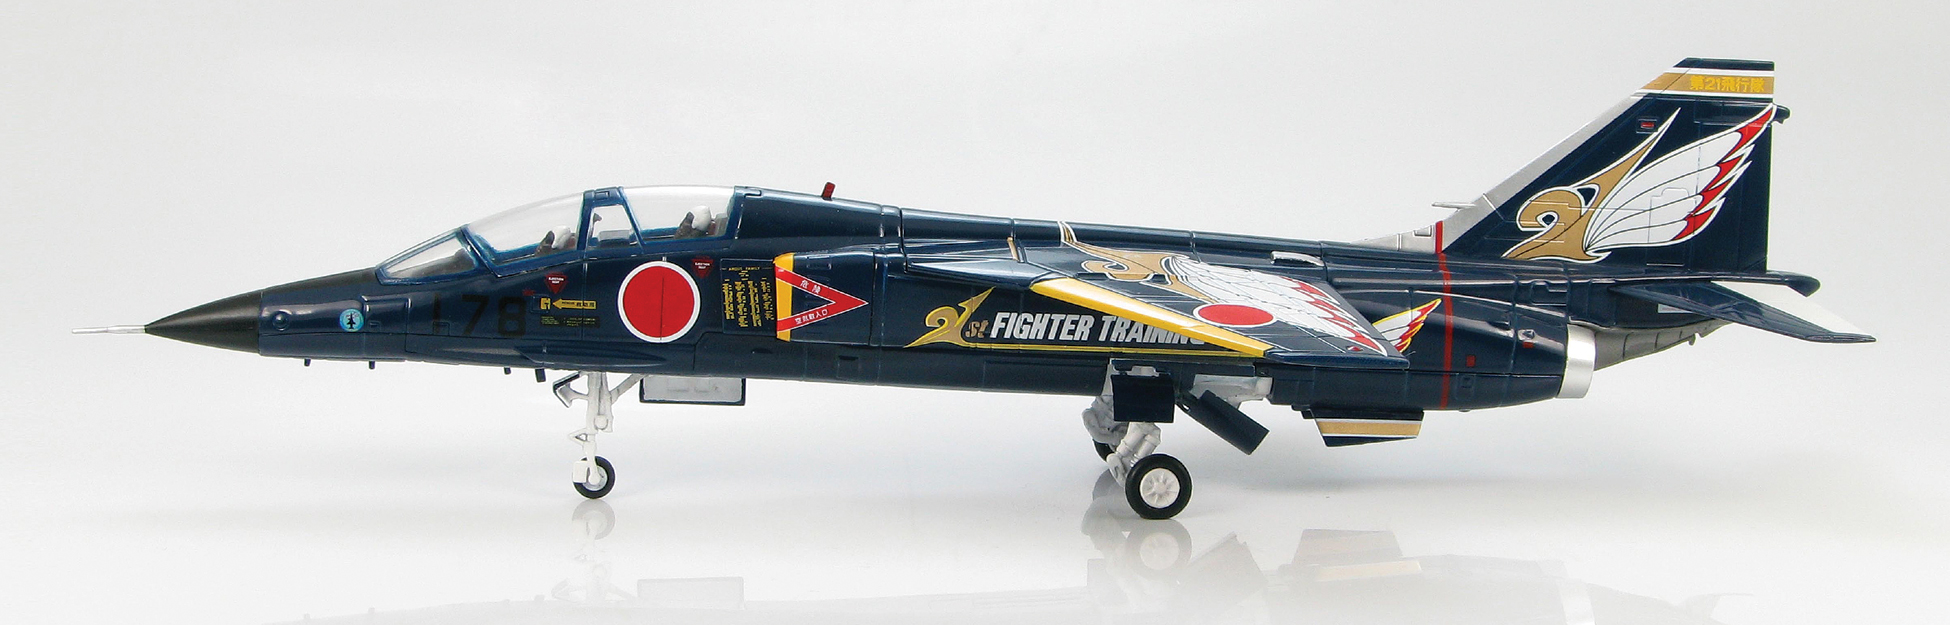 HA3406 MITSUBISHI T-2 21ST FIGHTER JASDF 2003 172